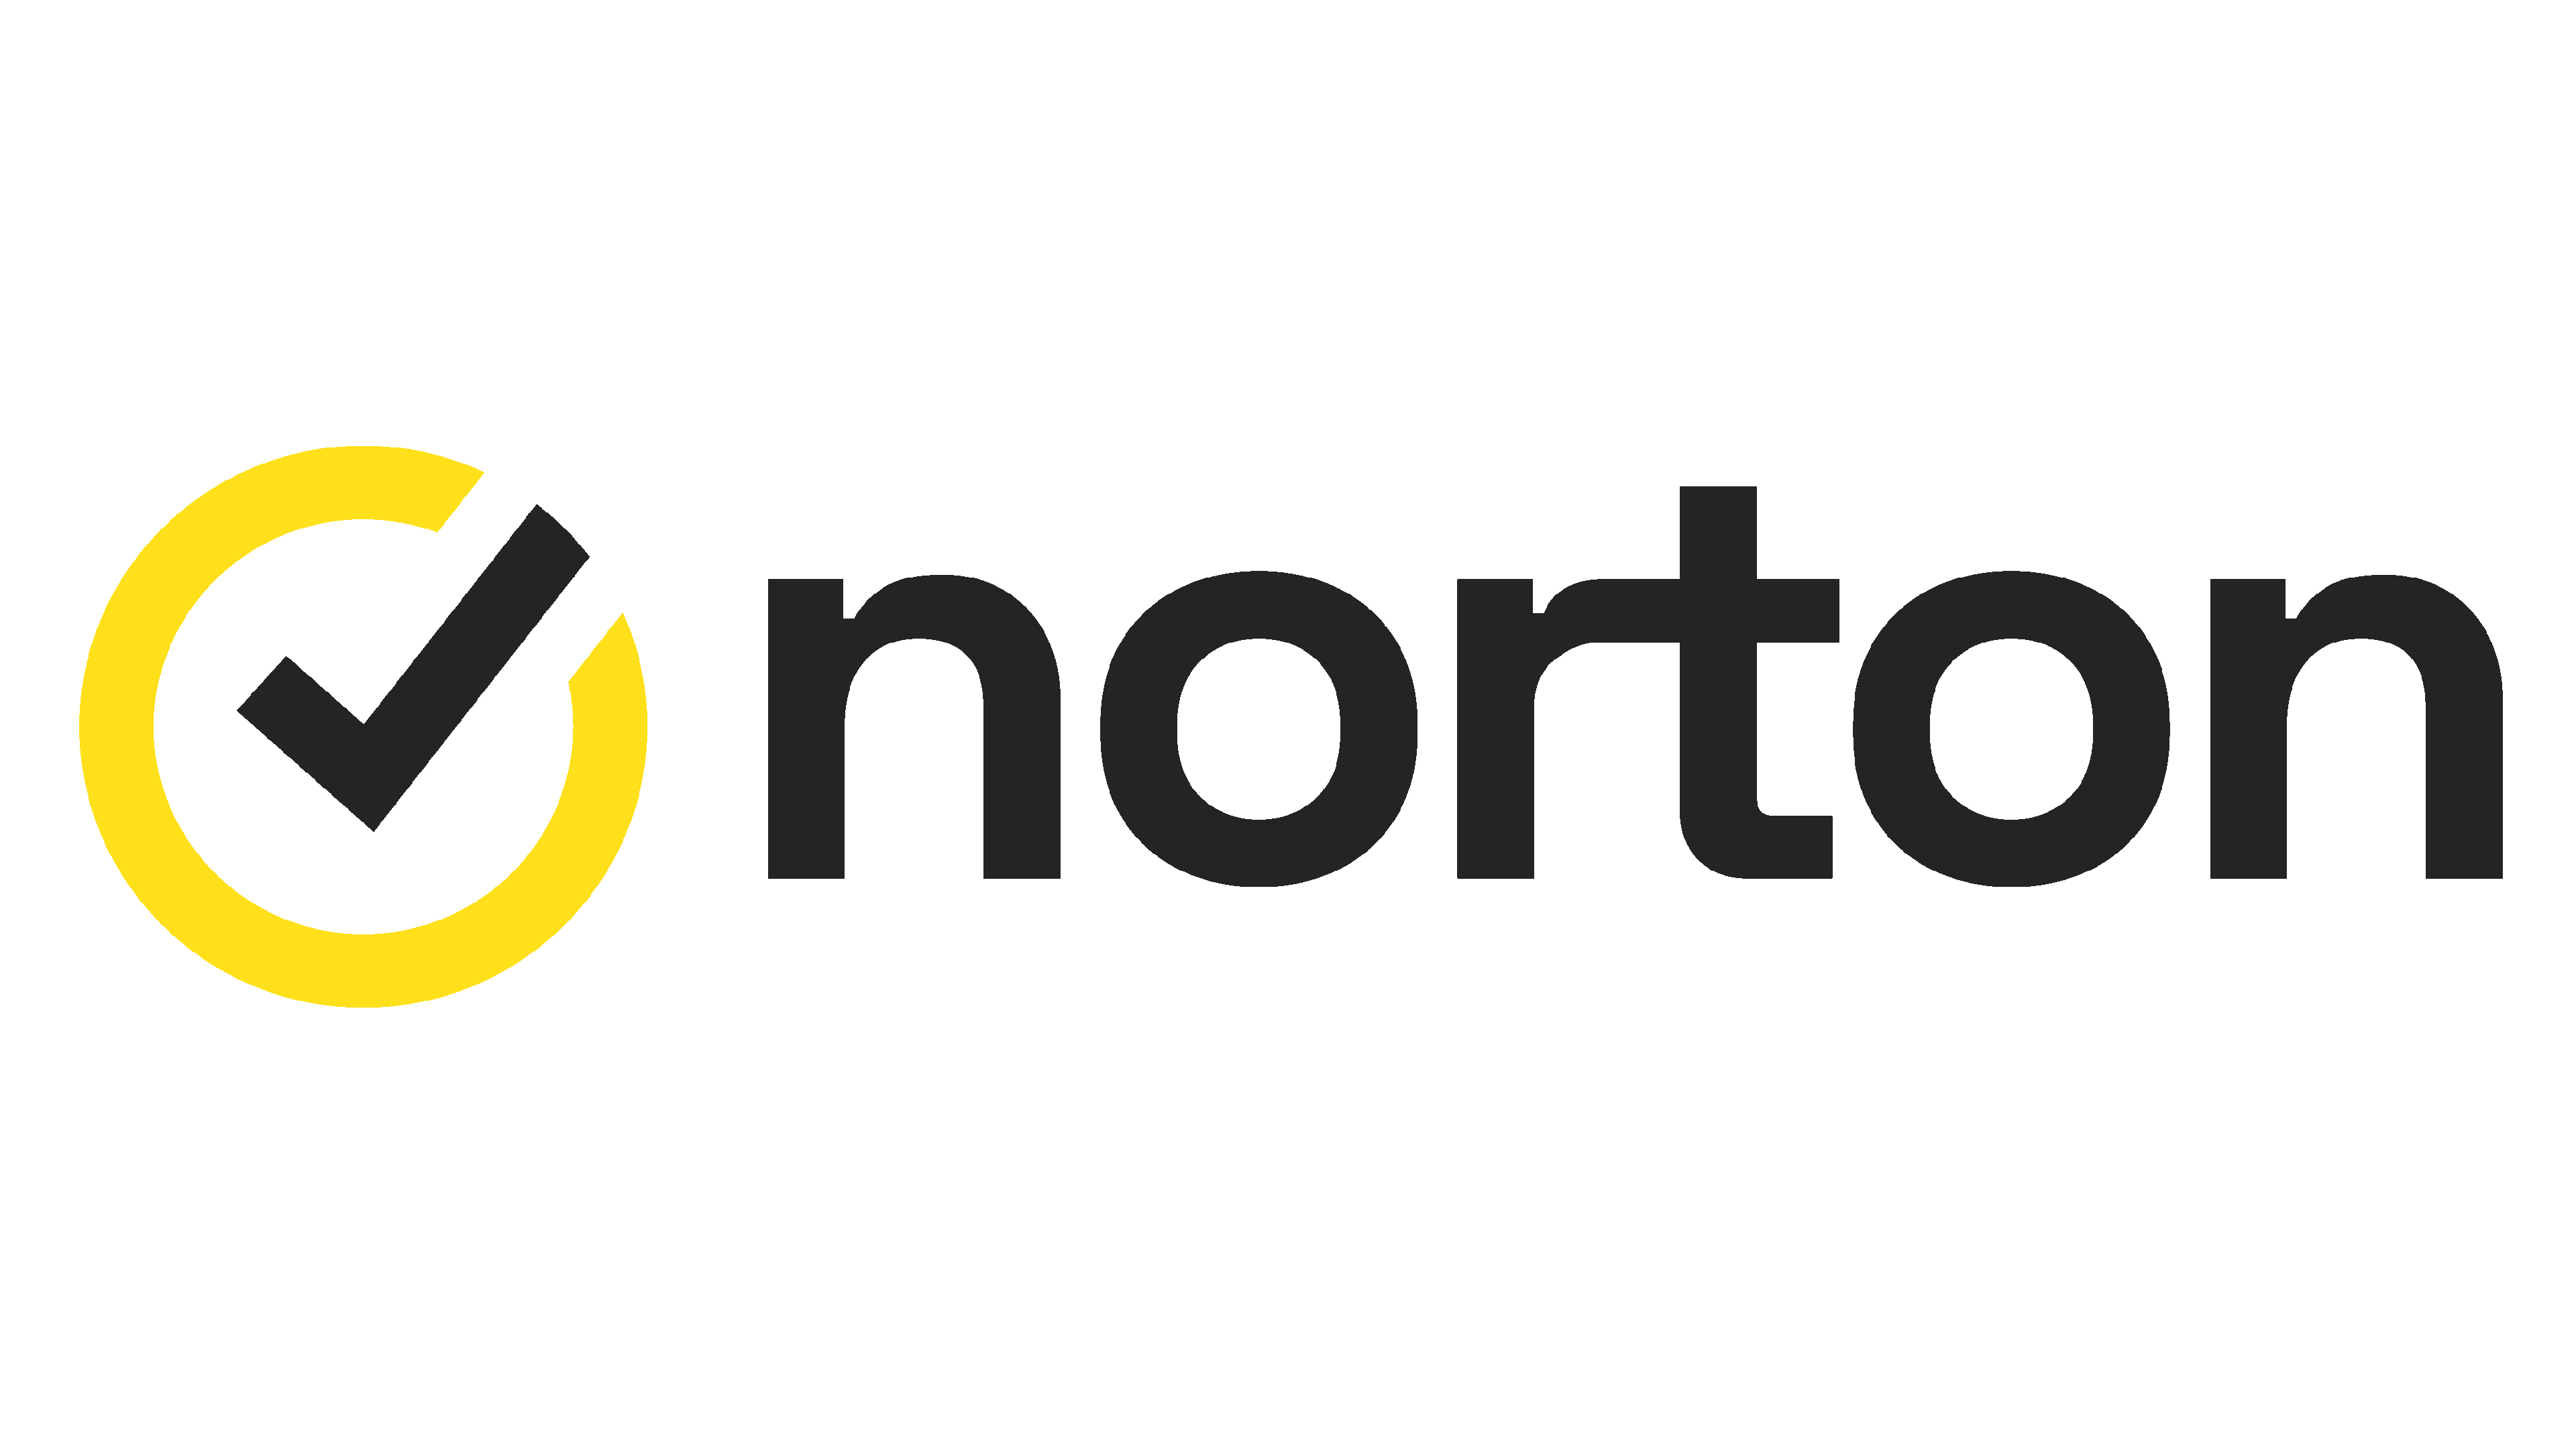 norton life lock support